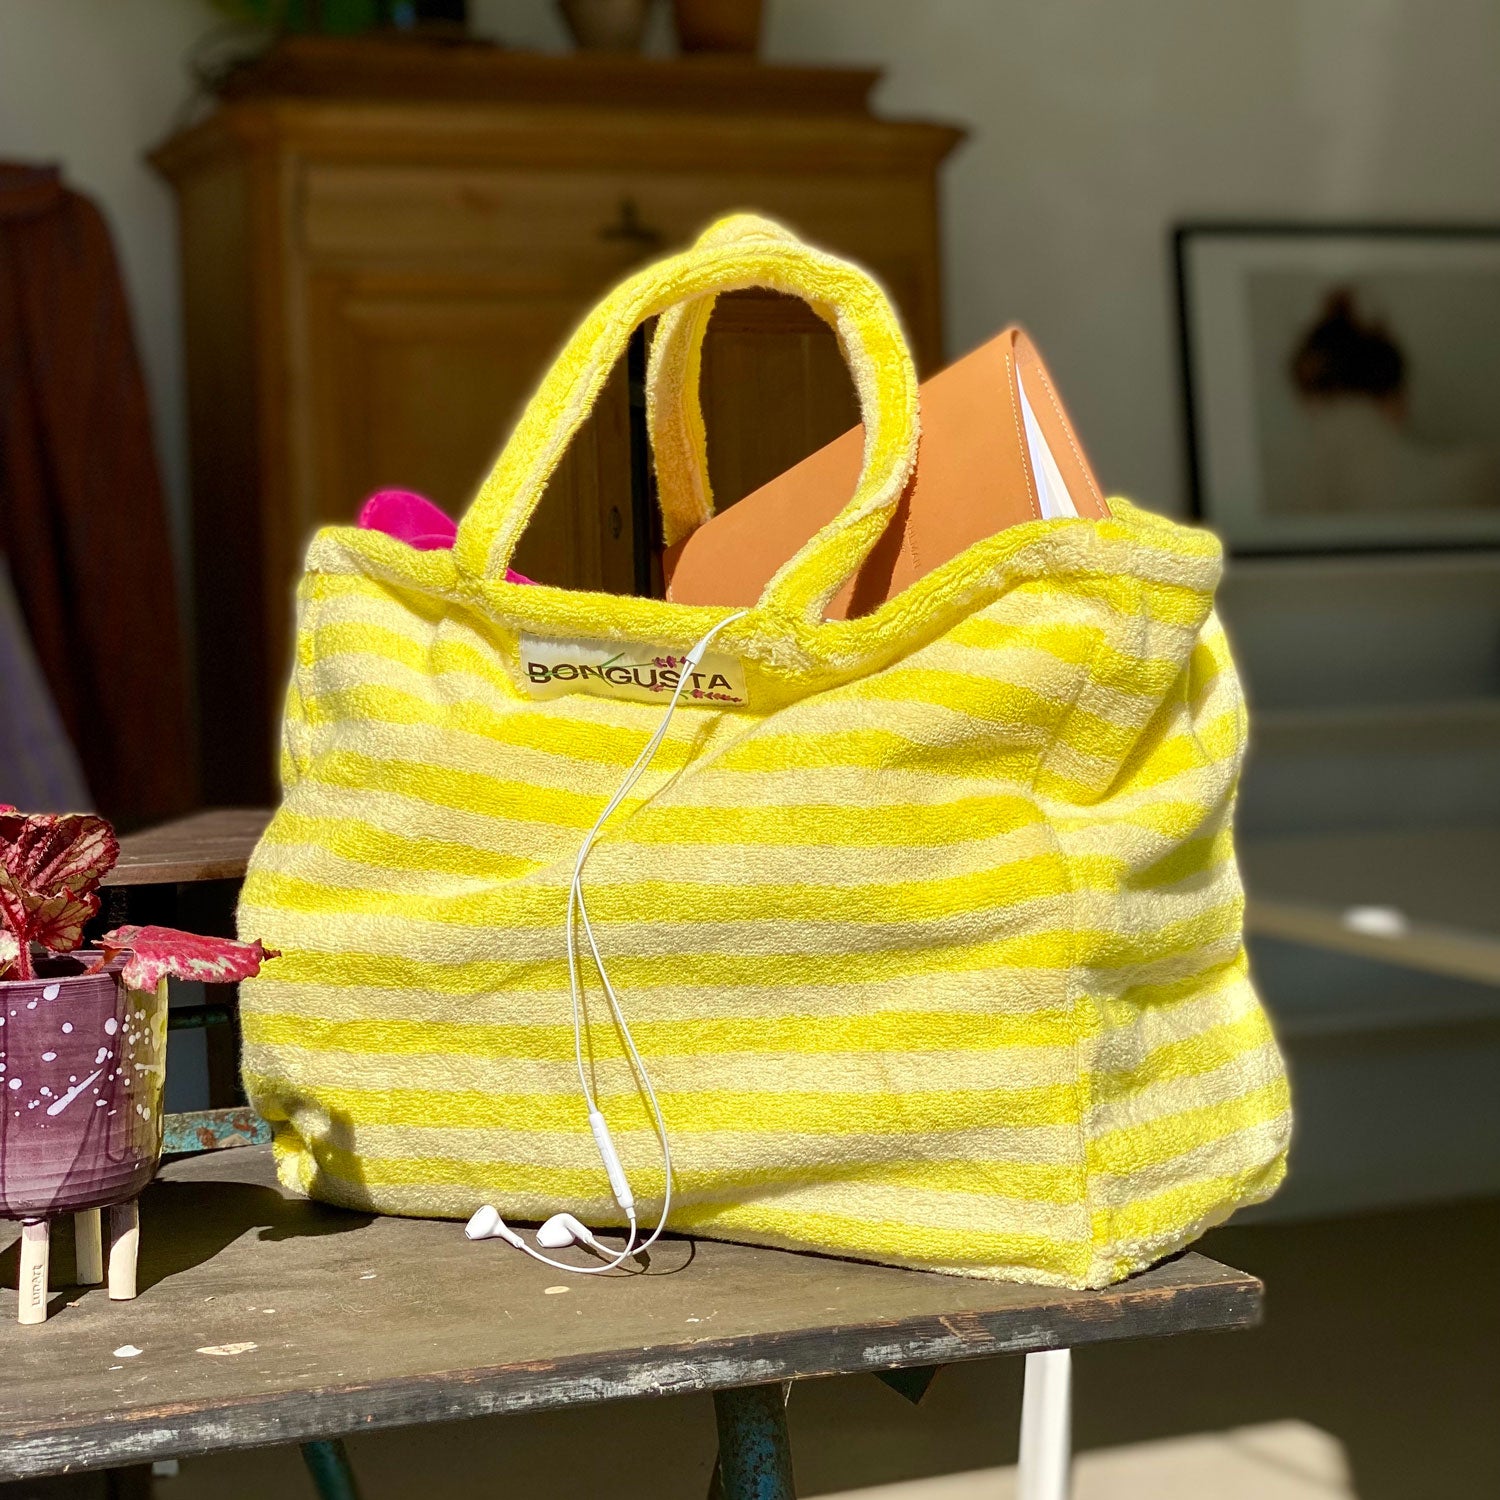 Bongusta Naram Weekend Bag - Pristine and Neon Yellow